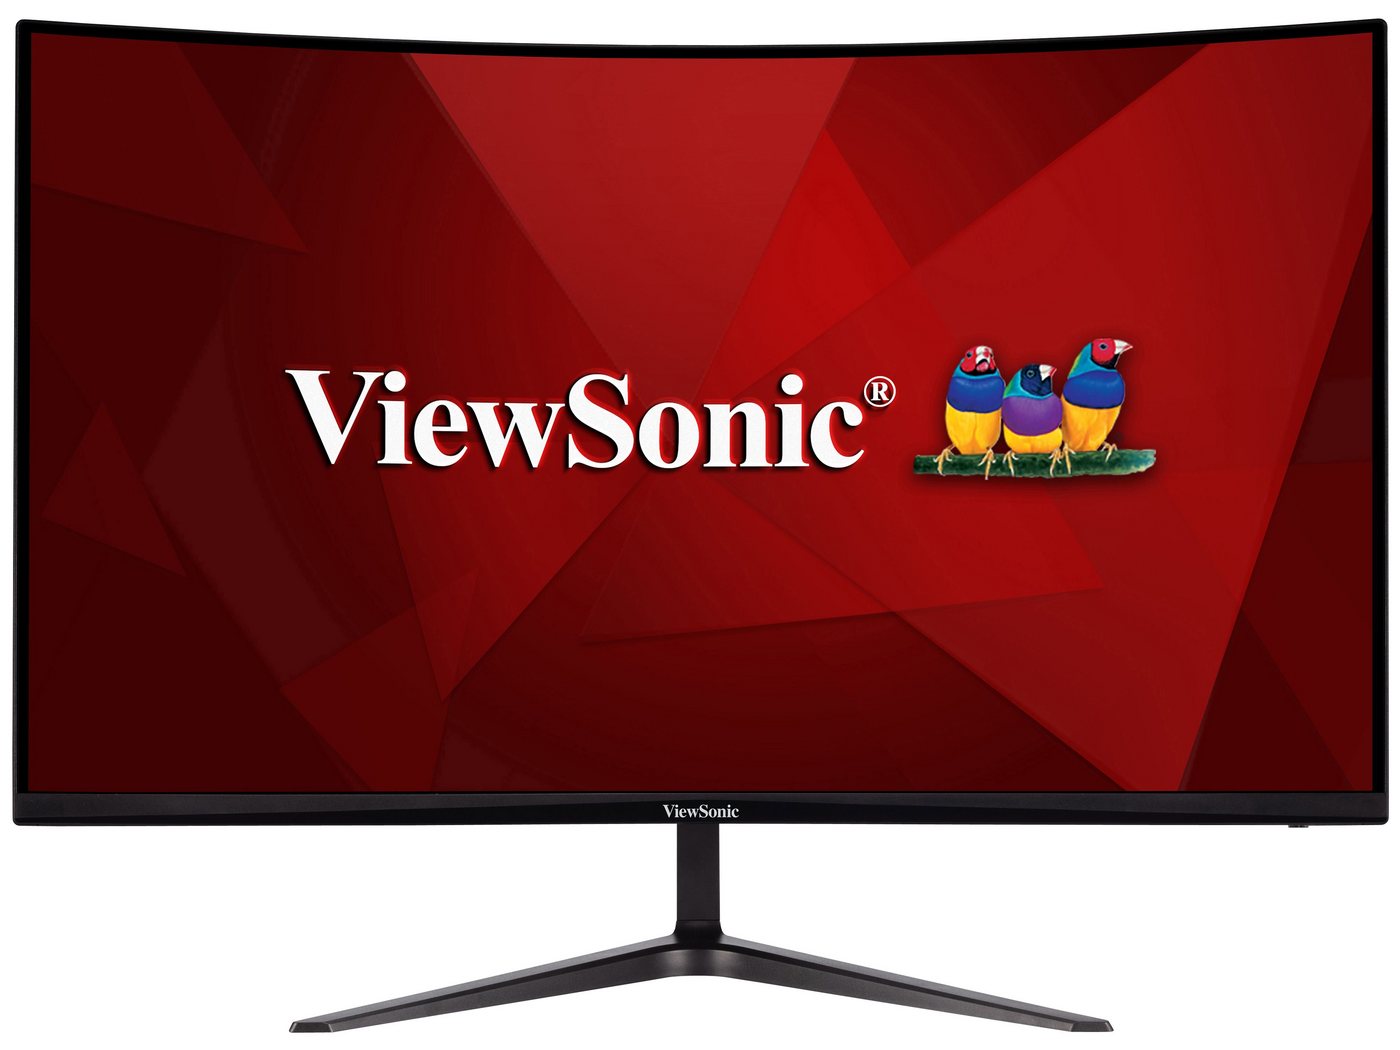 Viewsonic VIEWSONIC Monitor VX3219-PC-MHD, 80,0cm (31,5) TFT-Monitor von Viewsonic